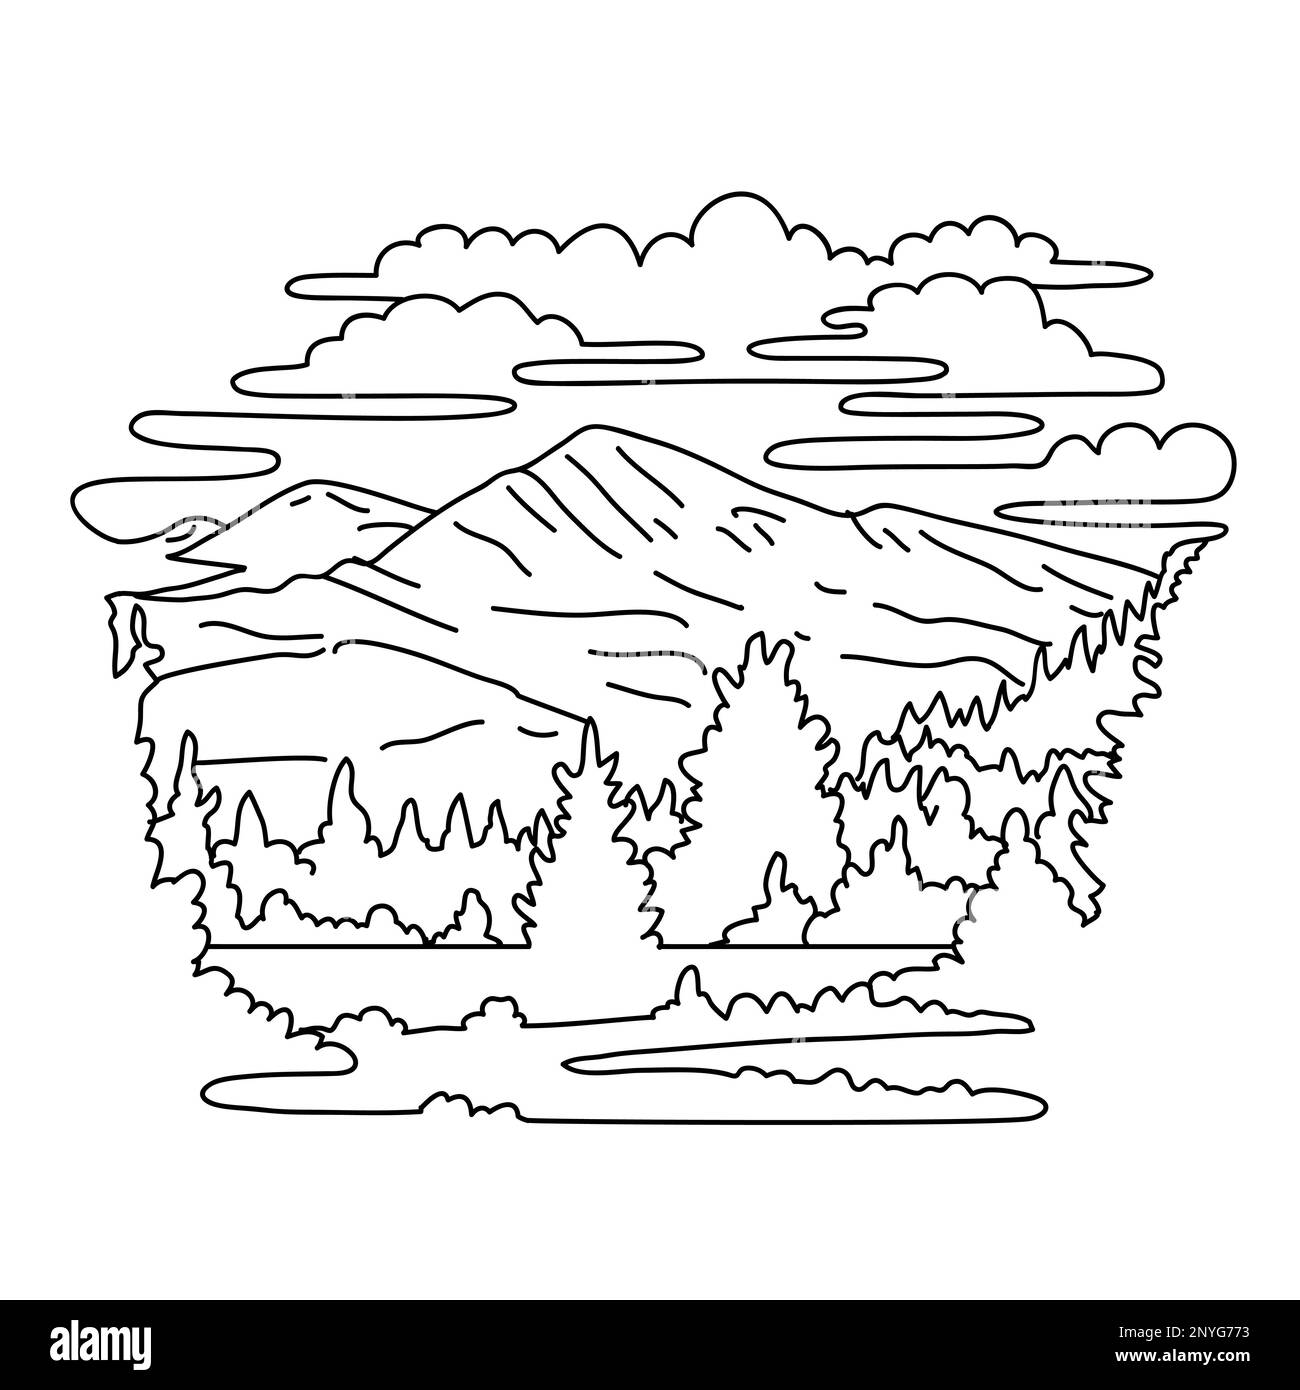 Mono line illustration of Mount Dana located within Yosemite National Park and Ansel Adams Wildernessv monoline line drawing art style. Stock Photo